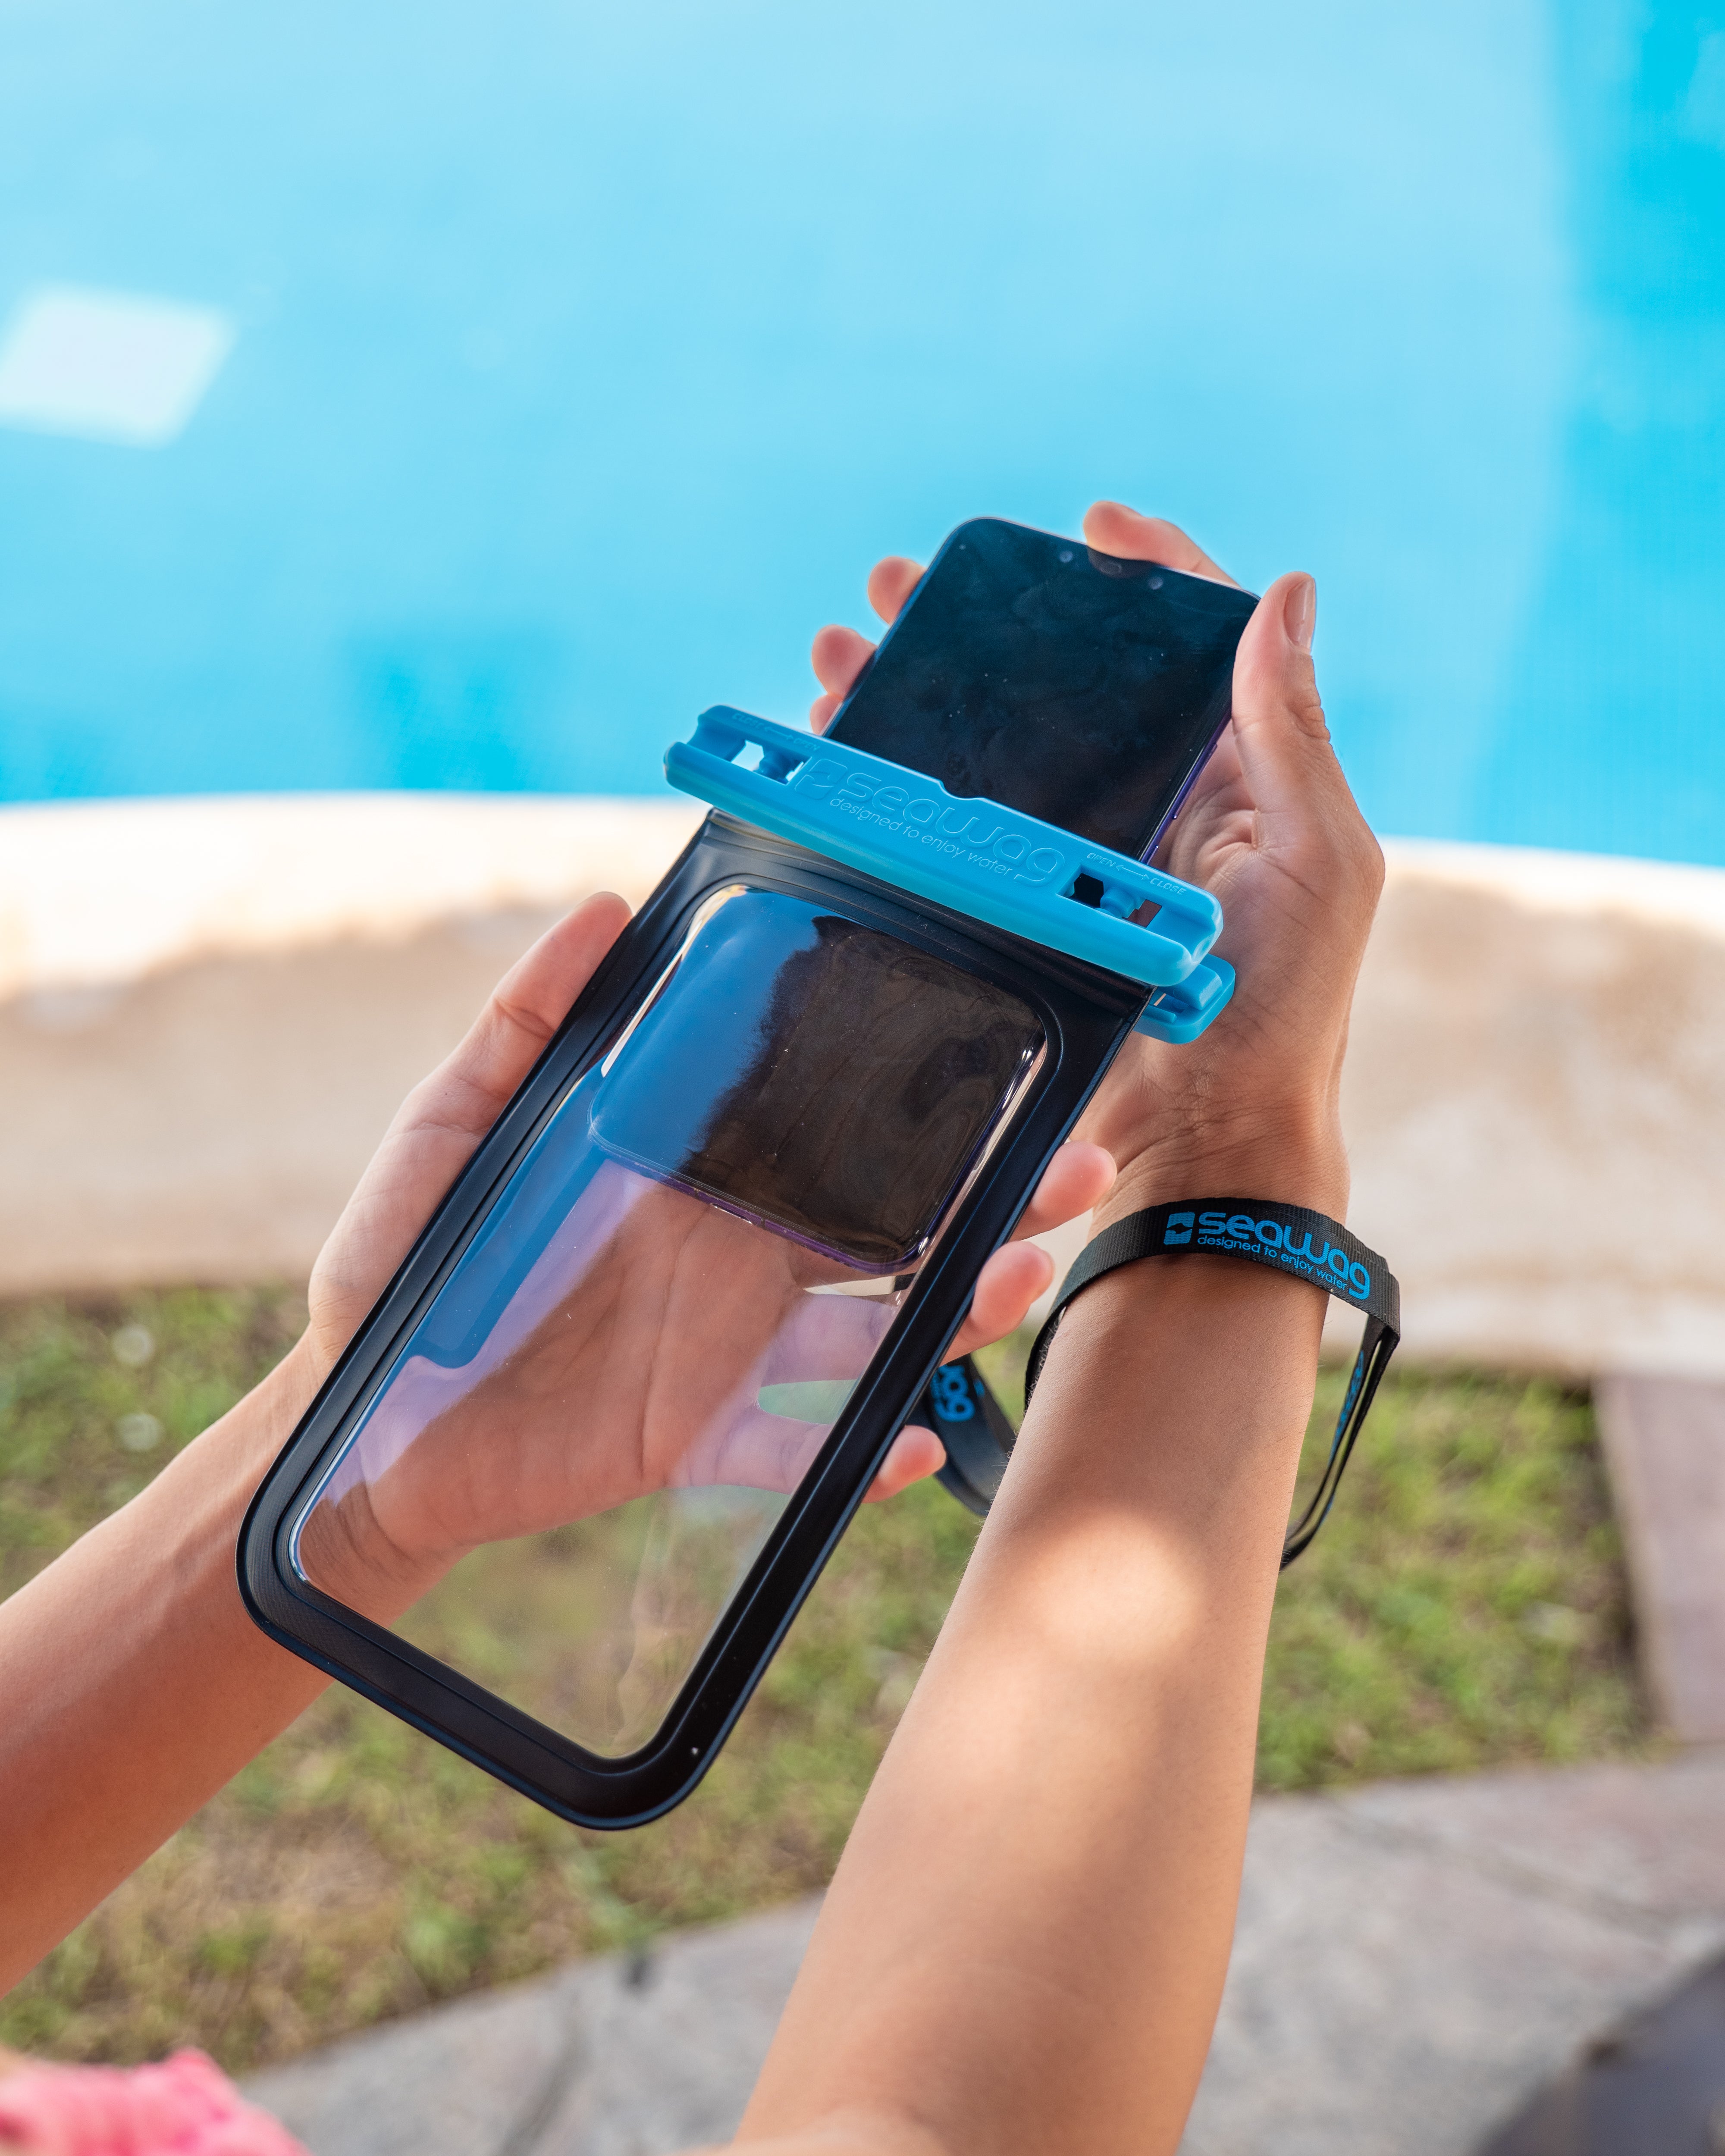 Universal Waterproof Case For Smartphone - Black/Pink